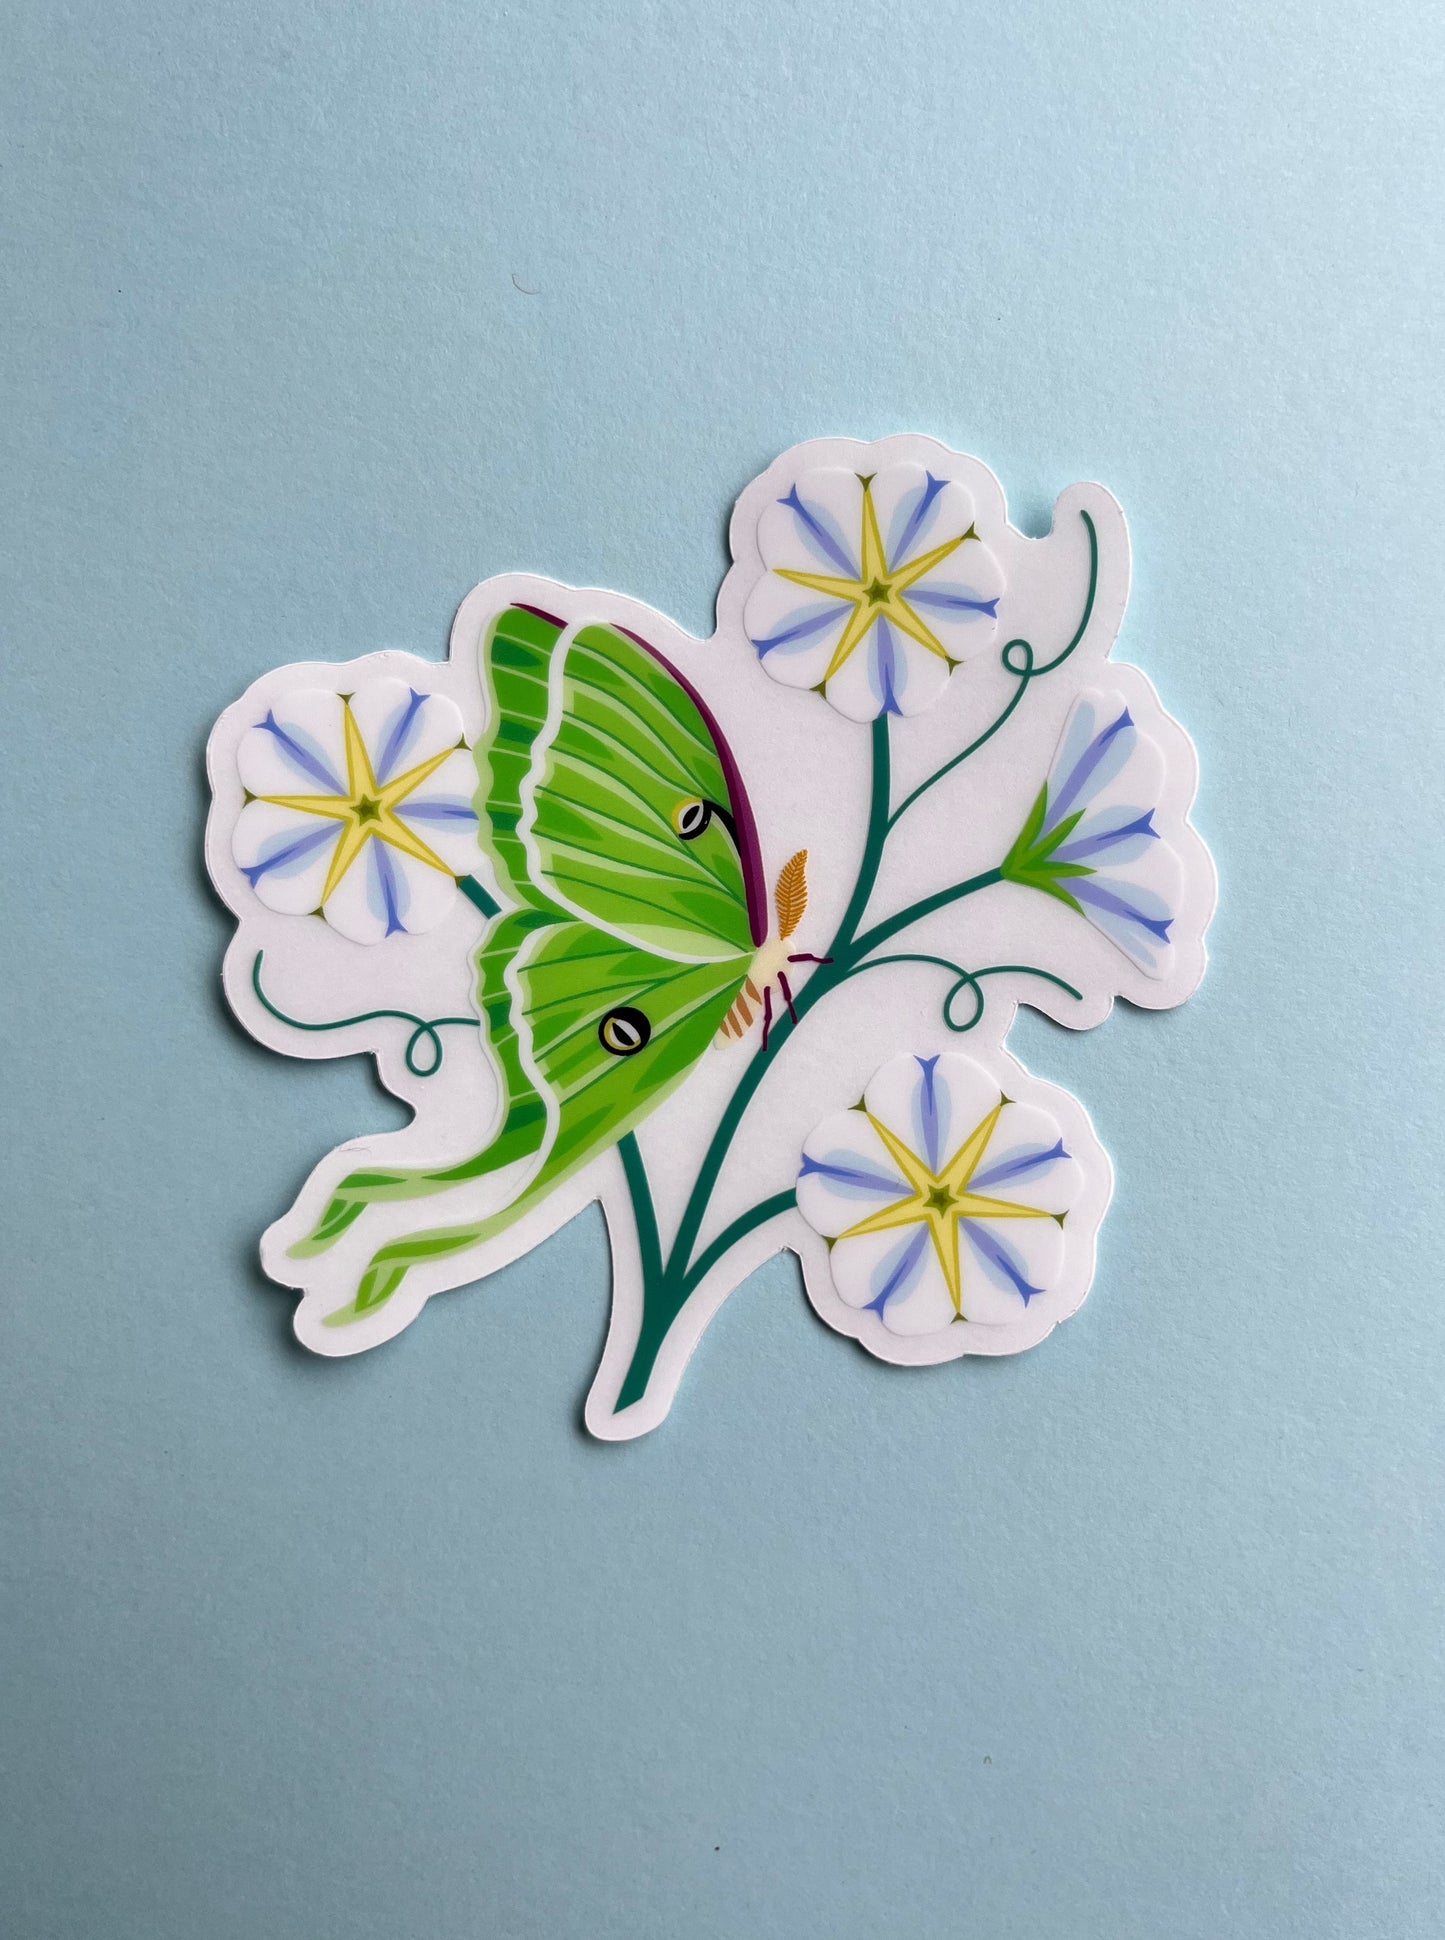 Luna Moth and Moon Flowers Sticker